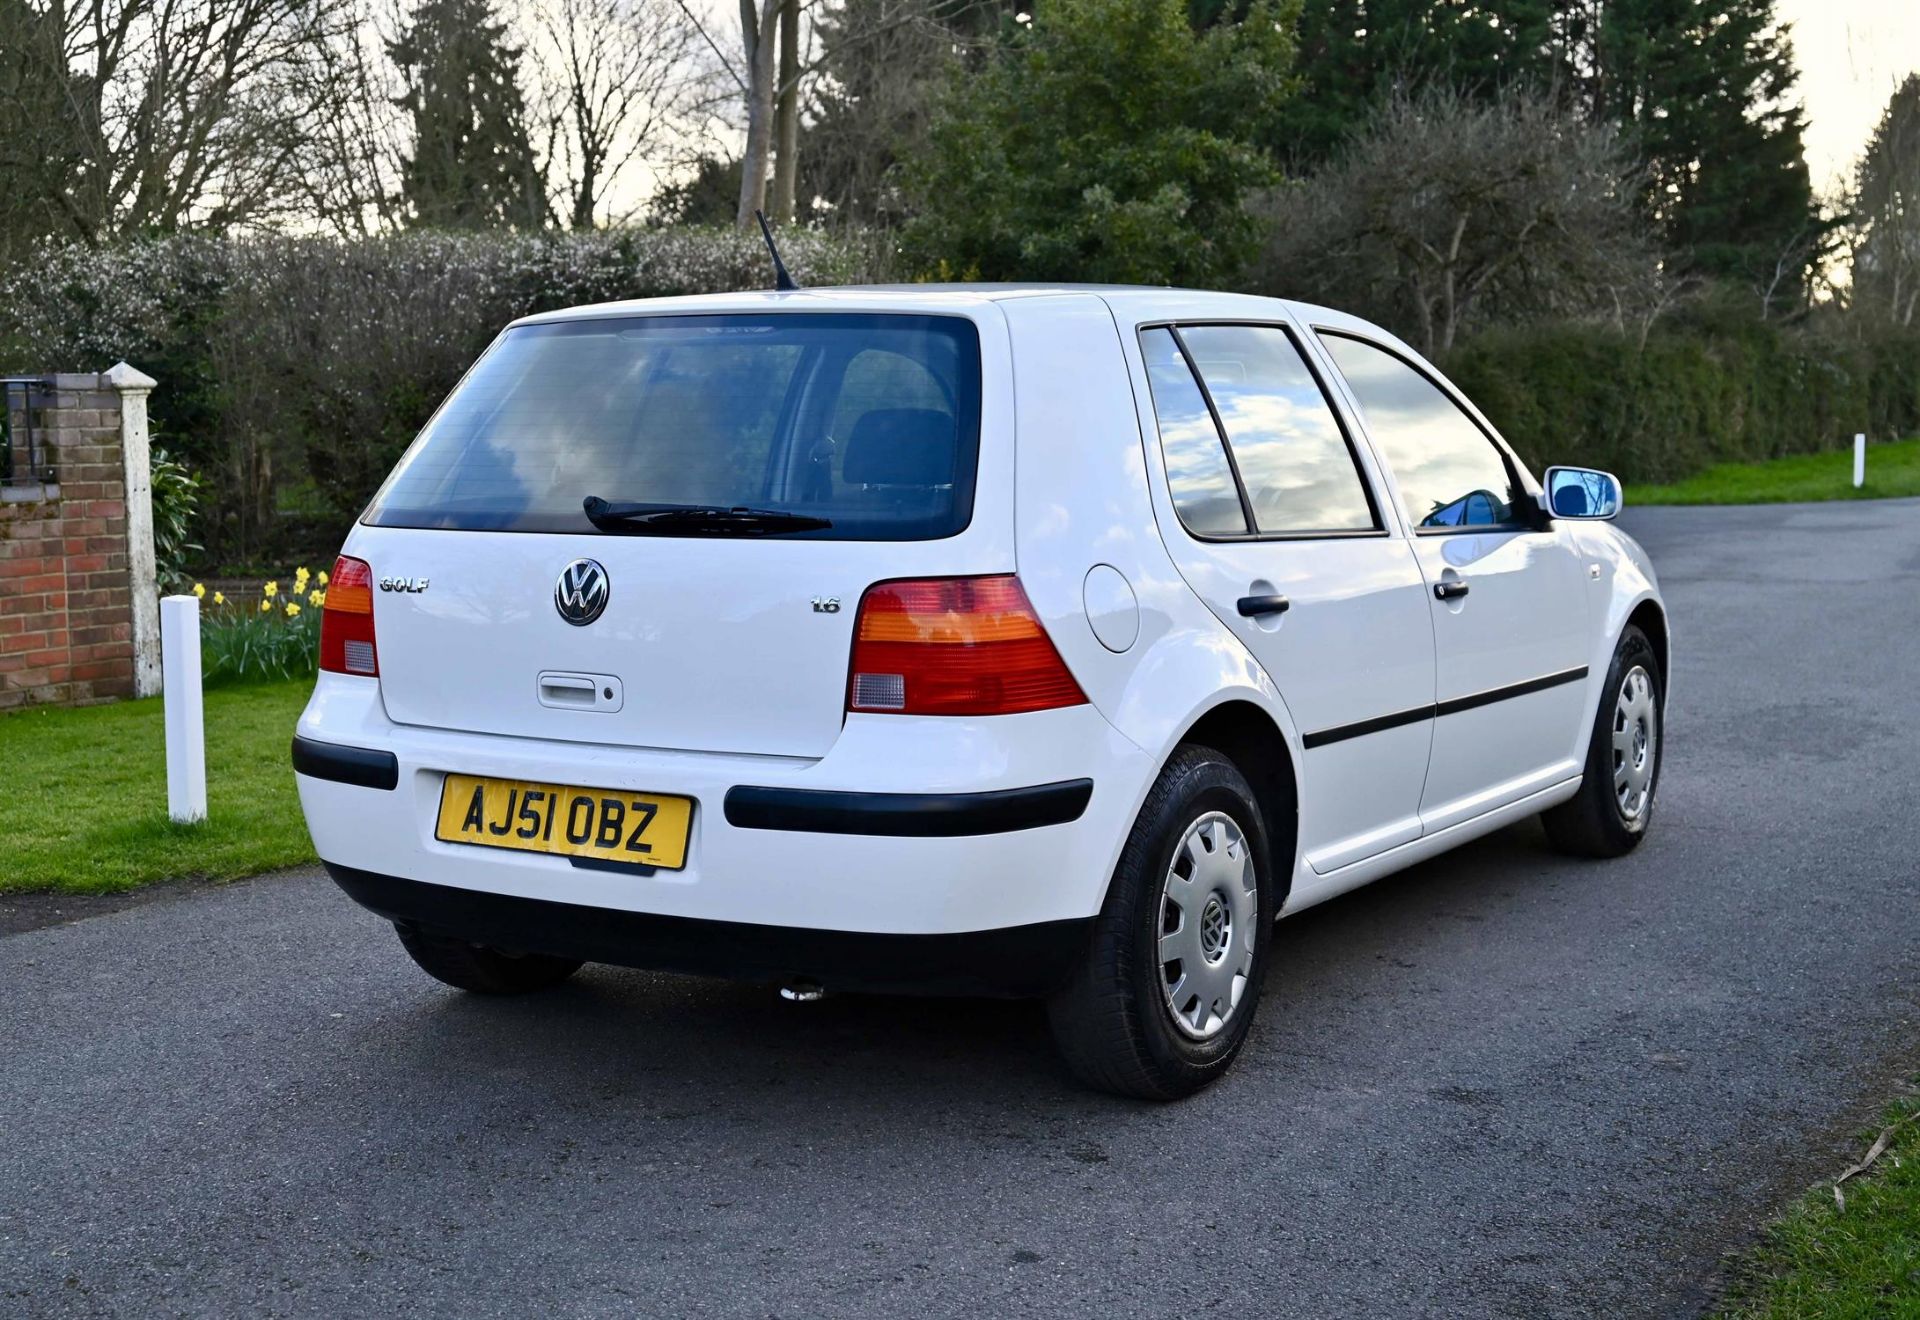 2001 VW Golf 1.6 S Auto 5-door Hatchback. Registration number AJ51 OBZ. White with black cloth - Image 5 of 14